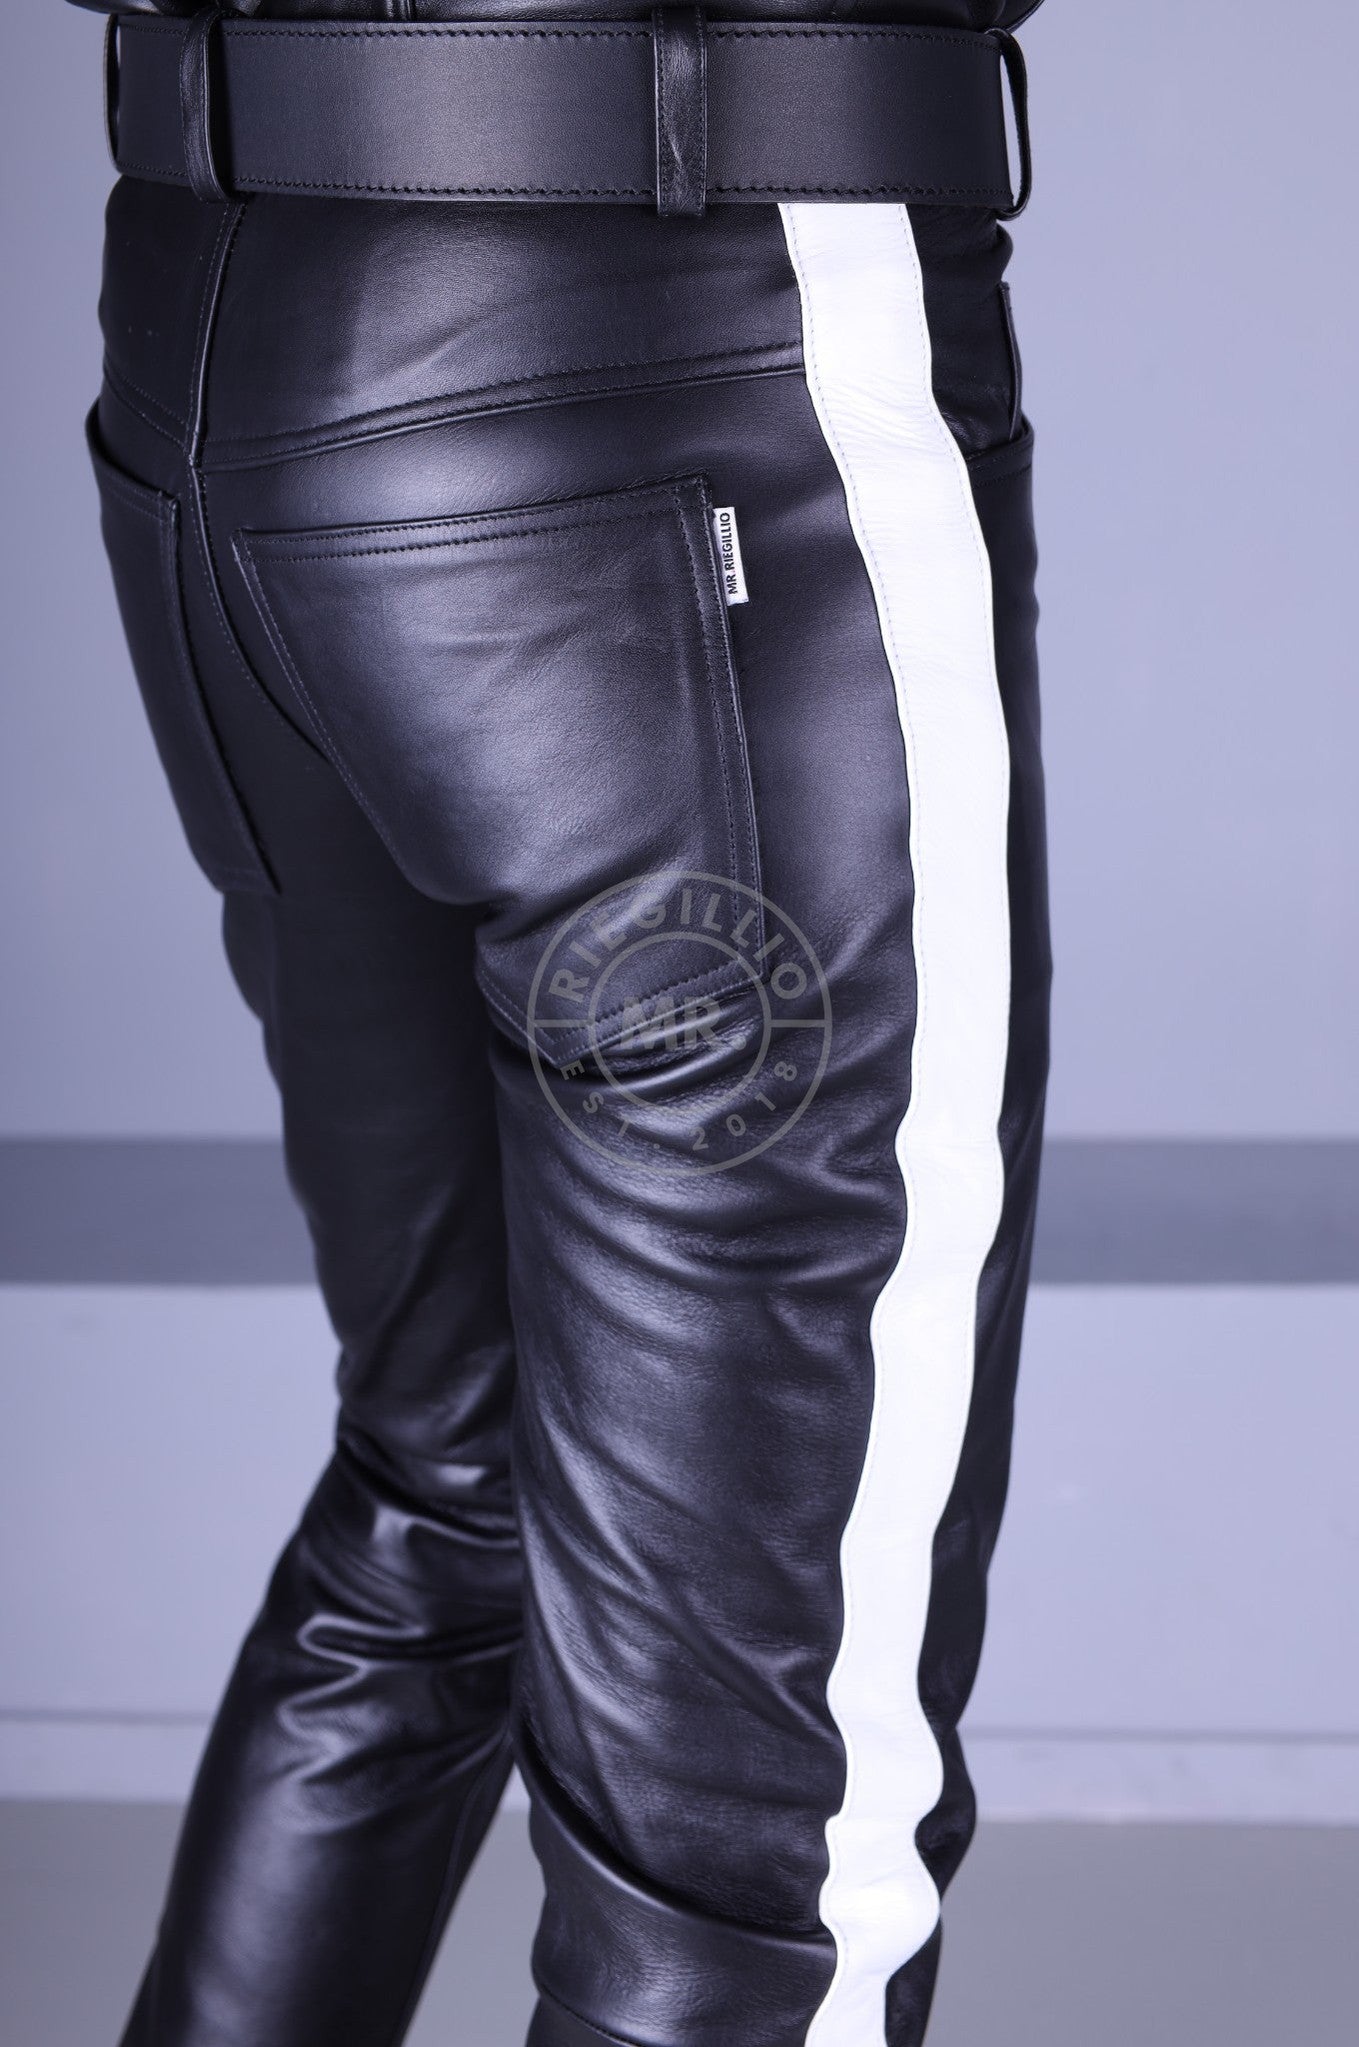 Black Leather 5 Pocket Pants - White Stripe at MR. Riegillio